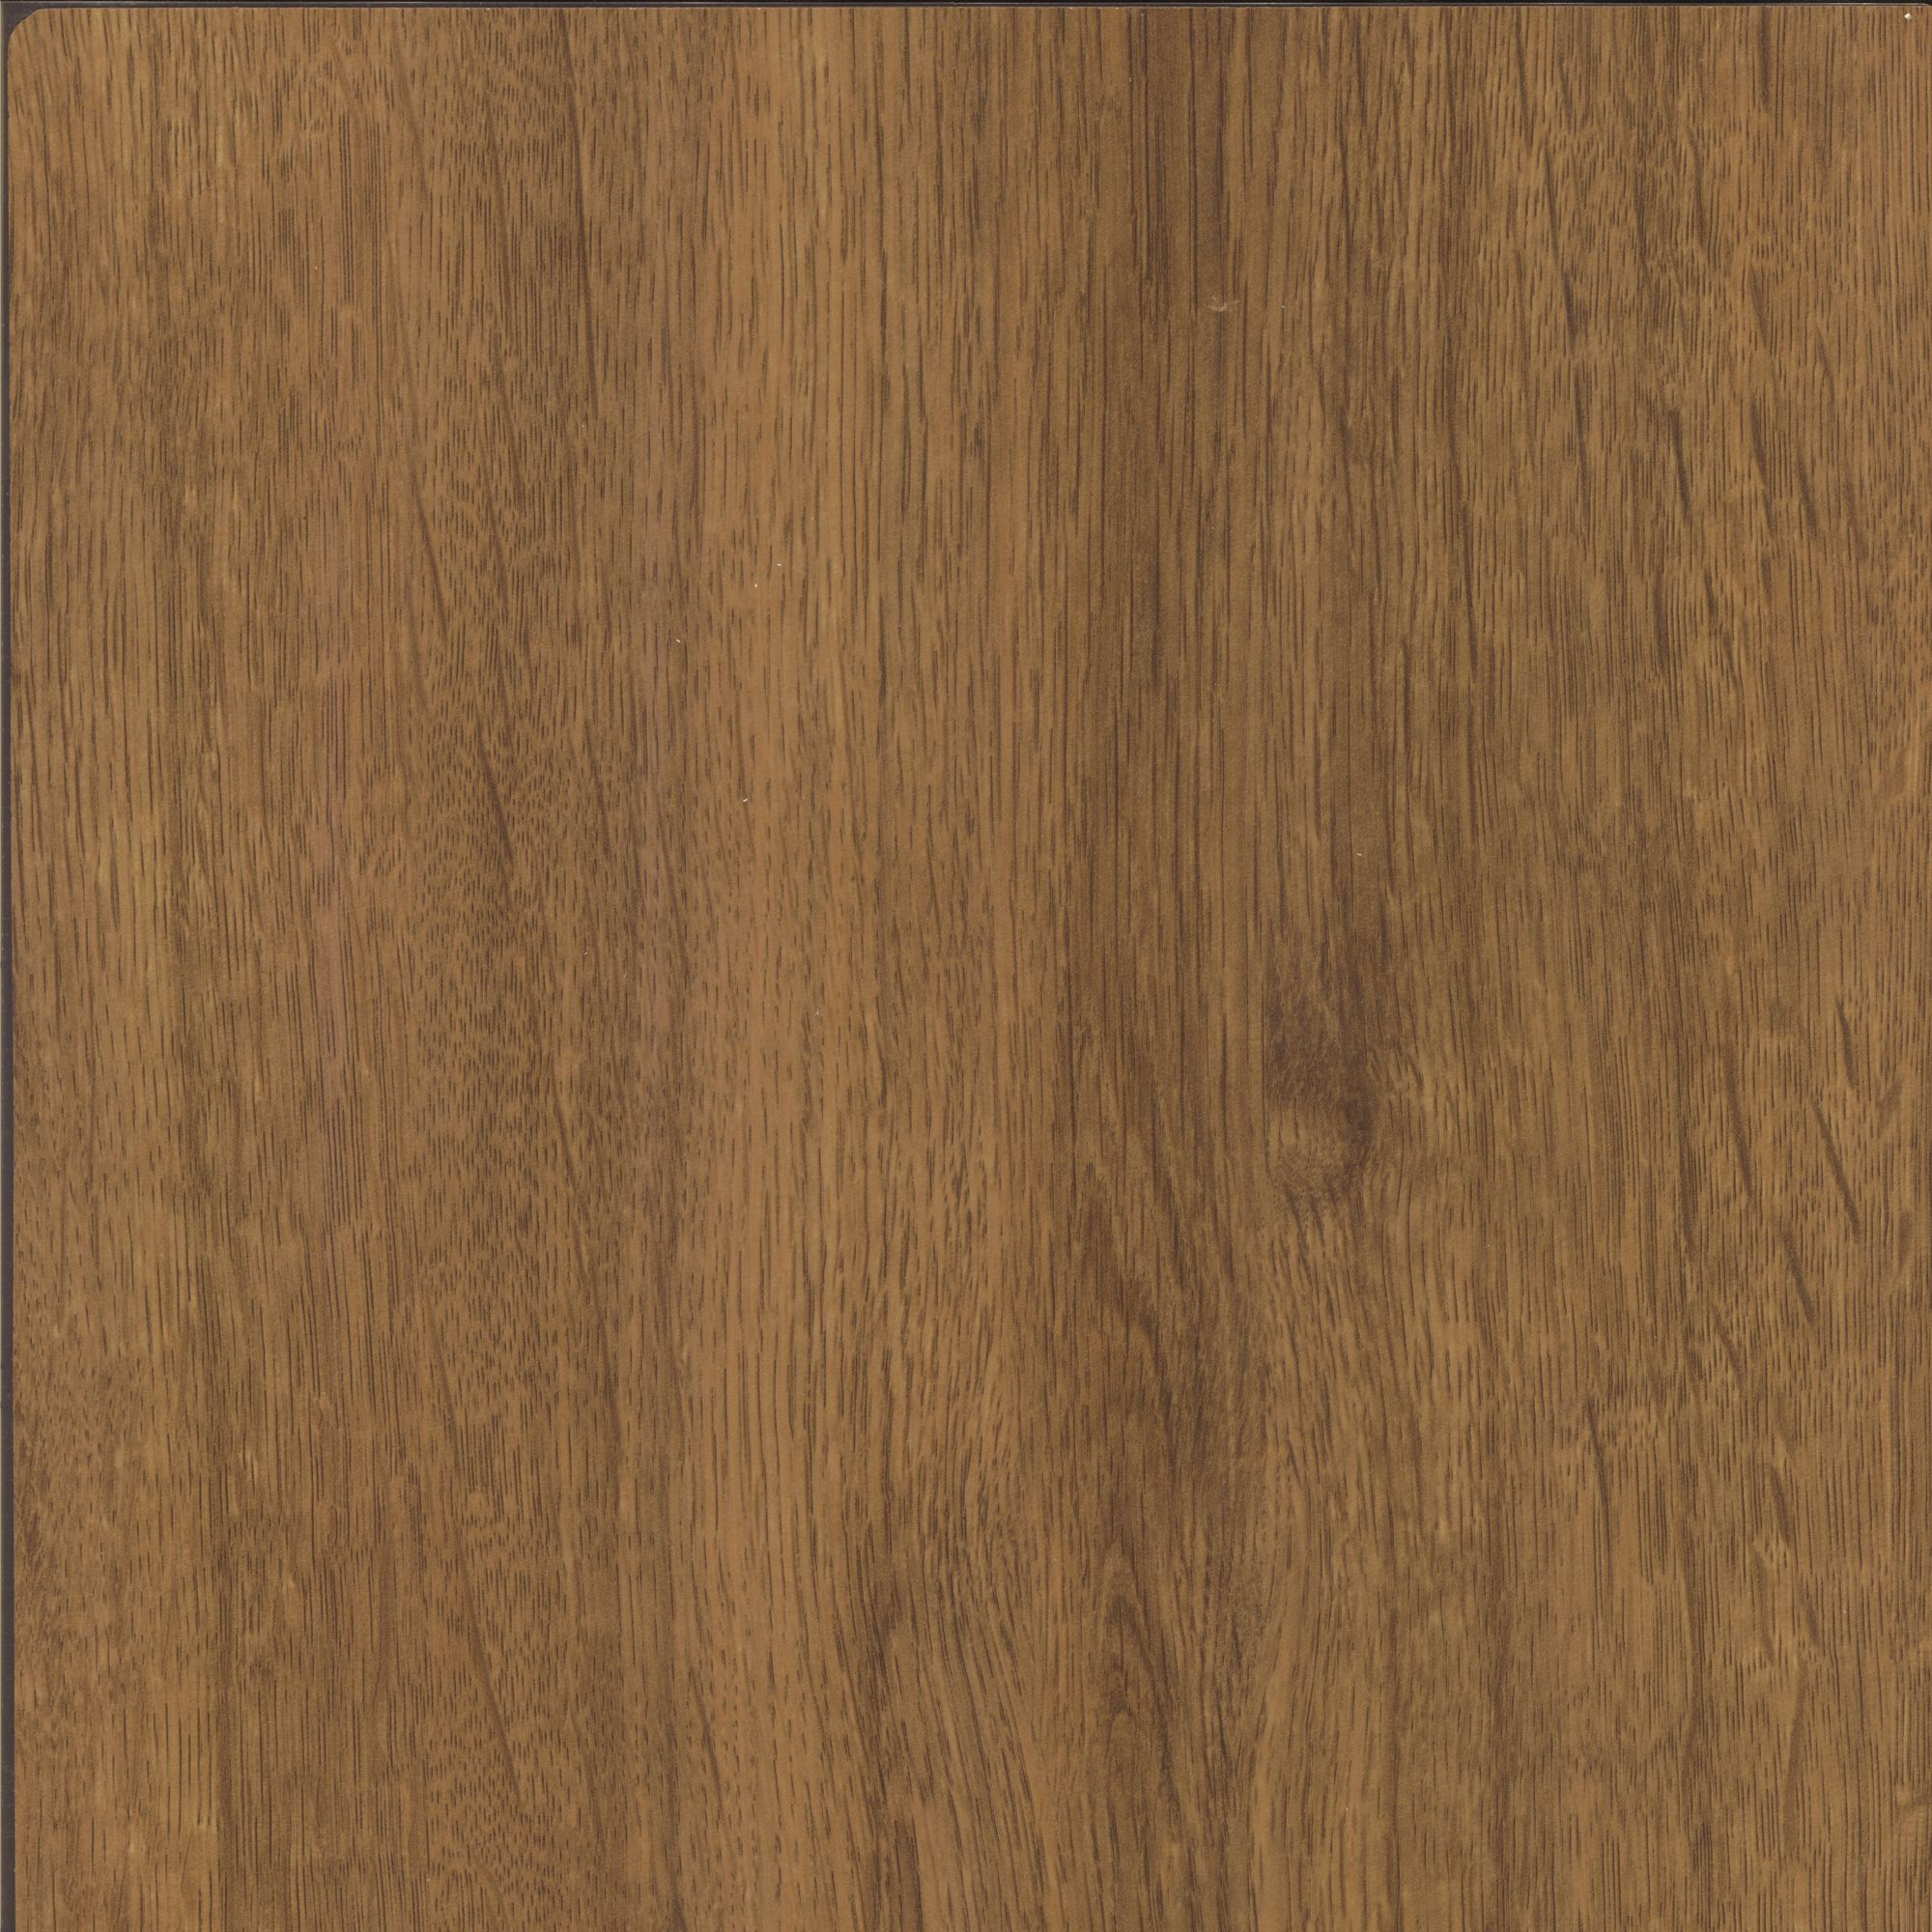 Colours Concertino Kolberg oak effect Laminate Flooring, 1.48m²